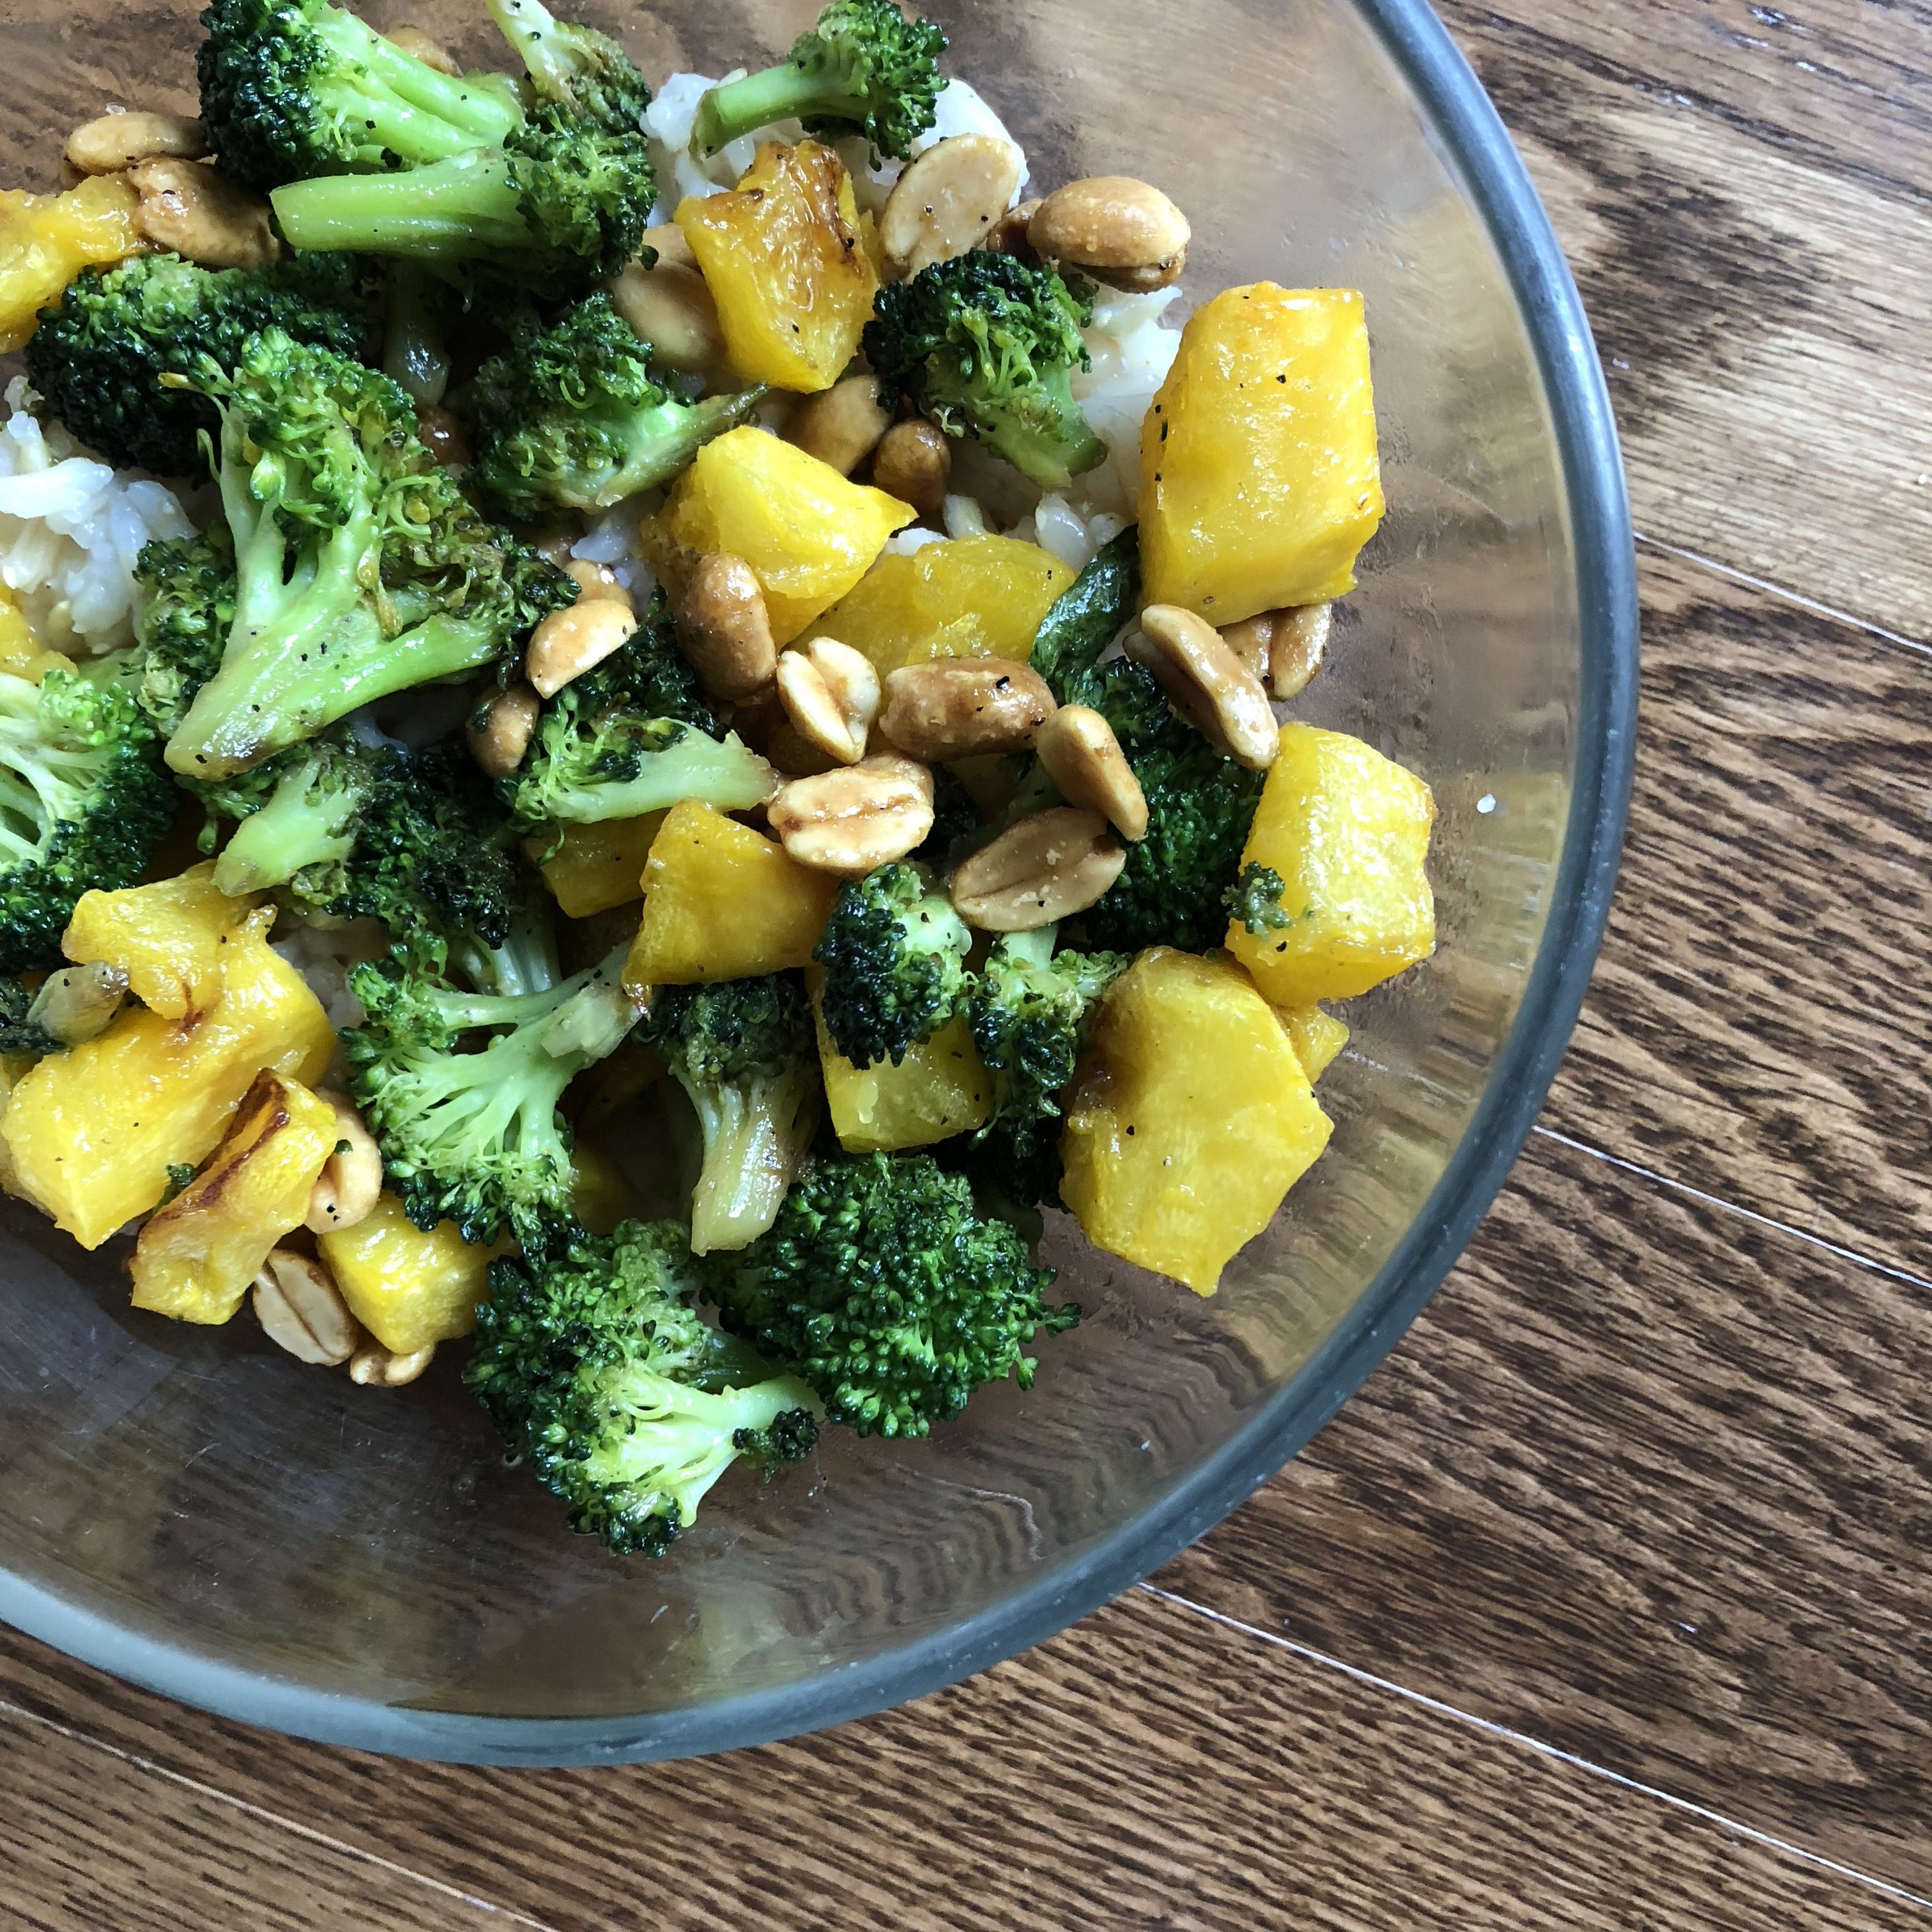 Sauteed Broccoli with Peanuts and Roasted Acorn Squash